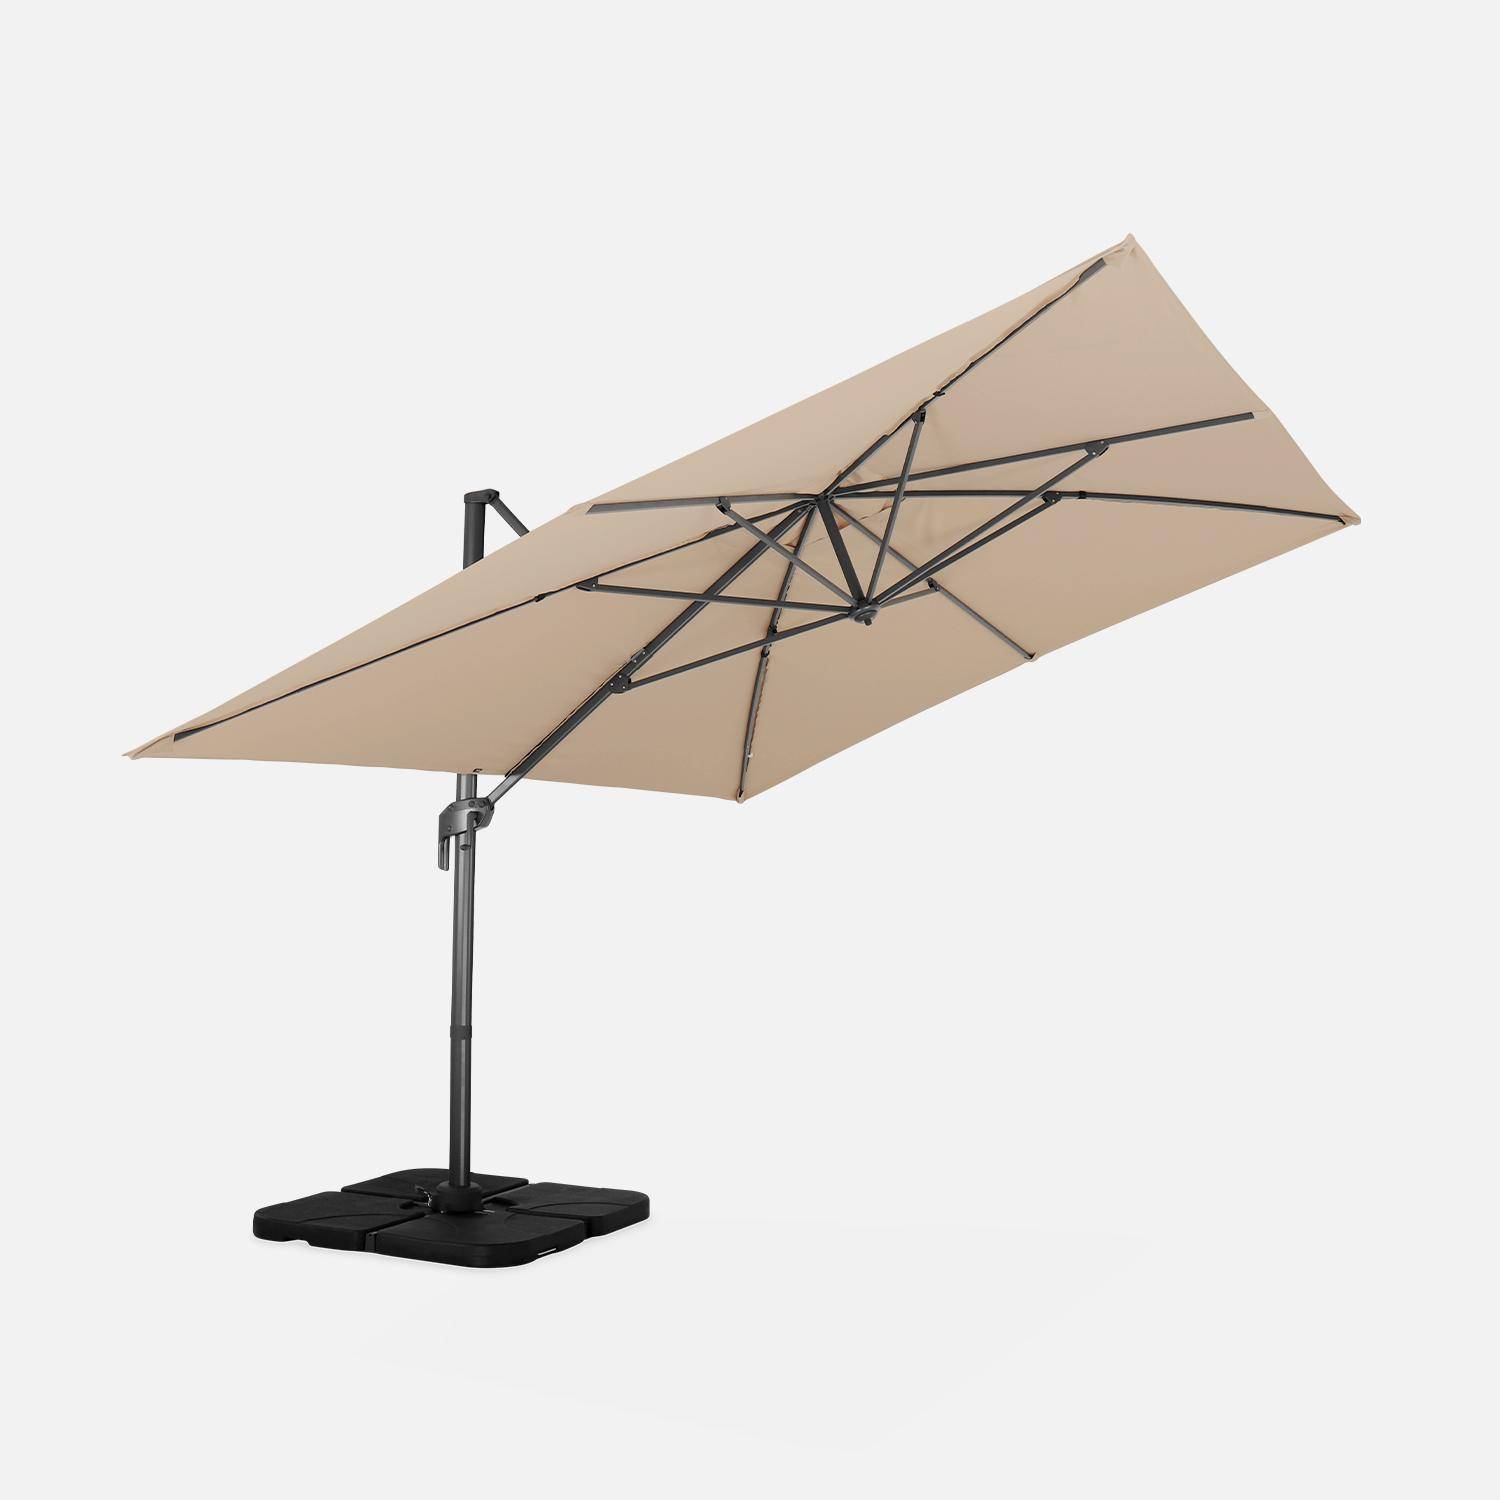 Parasol rectangular deportado 3 x 4 m - Antibes - beige - parasol deportado, basculante, plegable y giratorio a 360,sweeek,Photo5